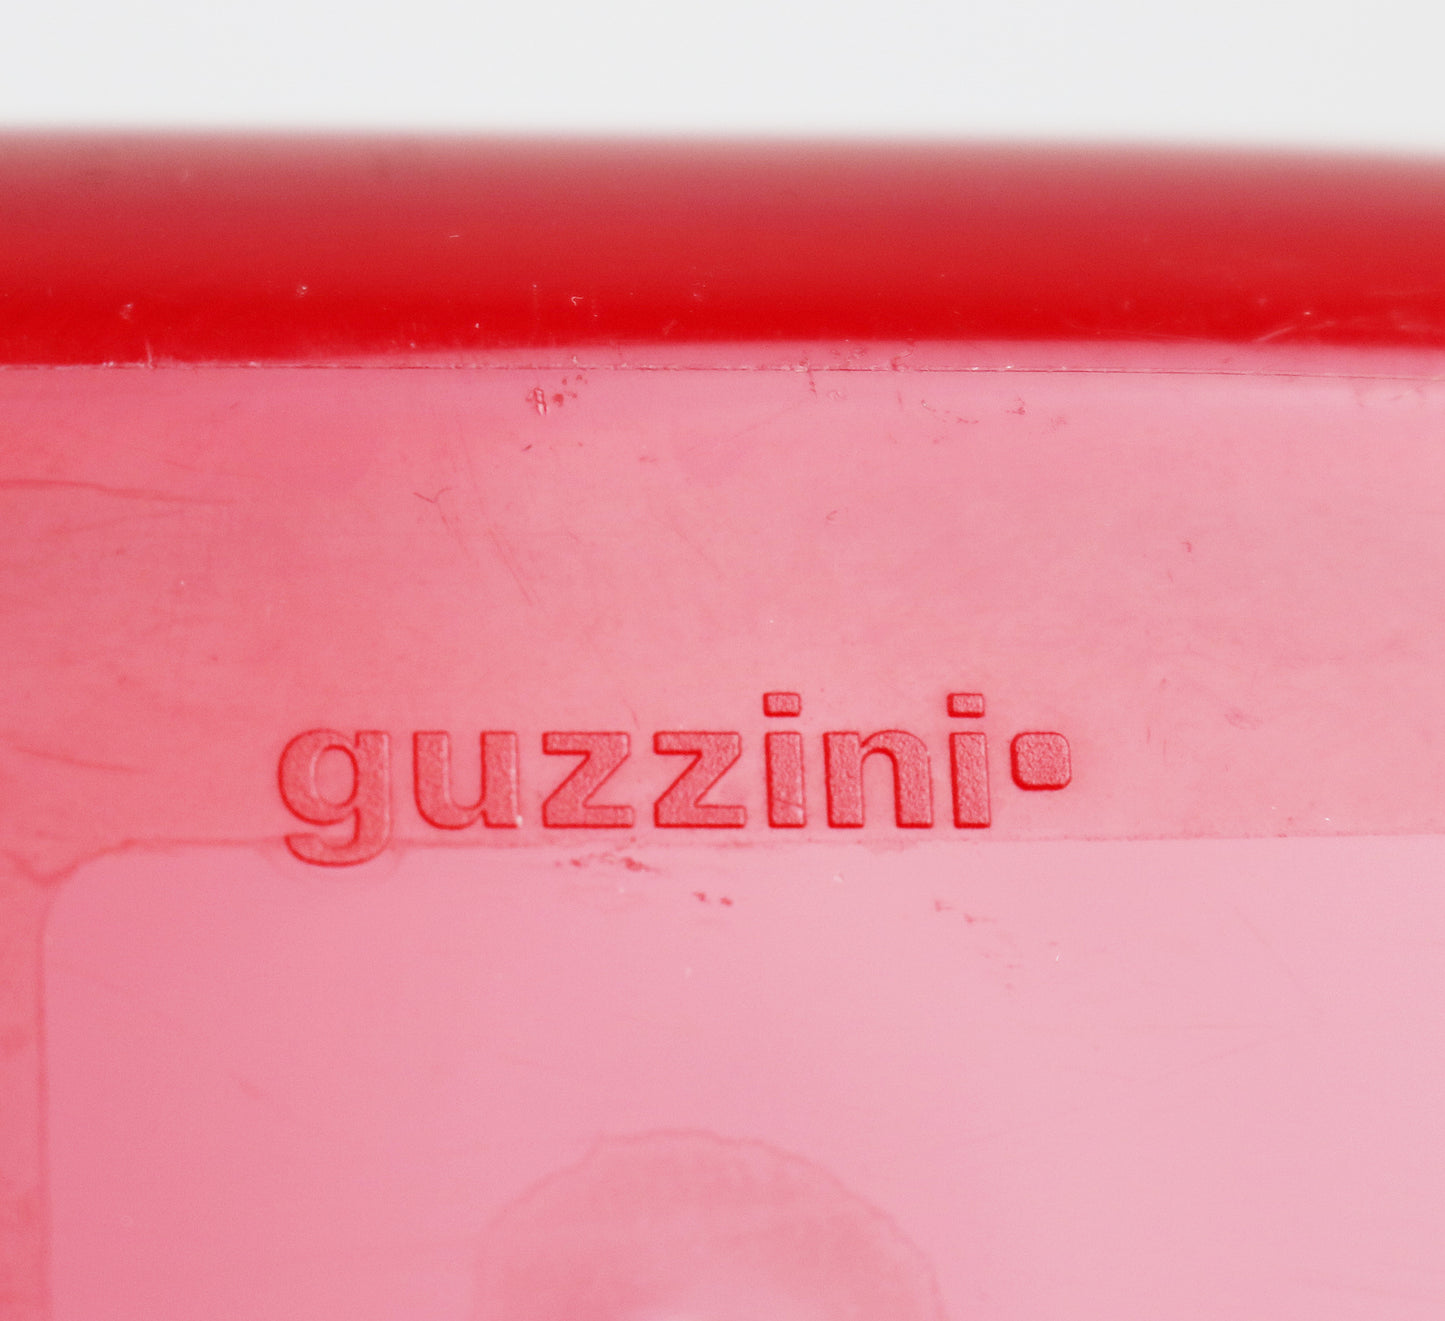 Retired and preloved coffee jar by Guzzini Lavazza